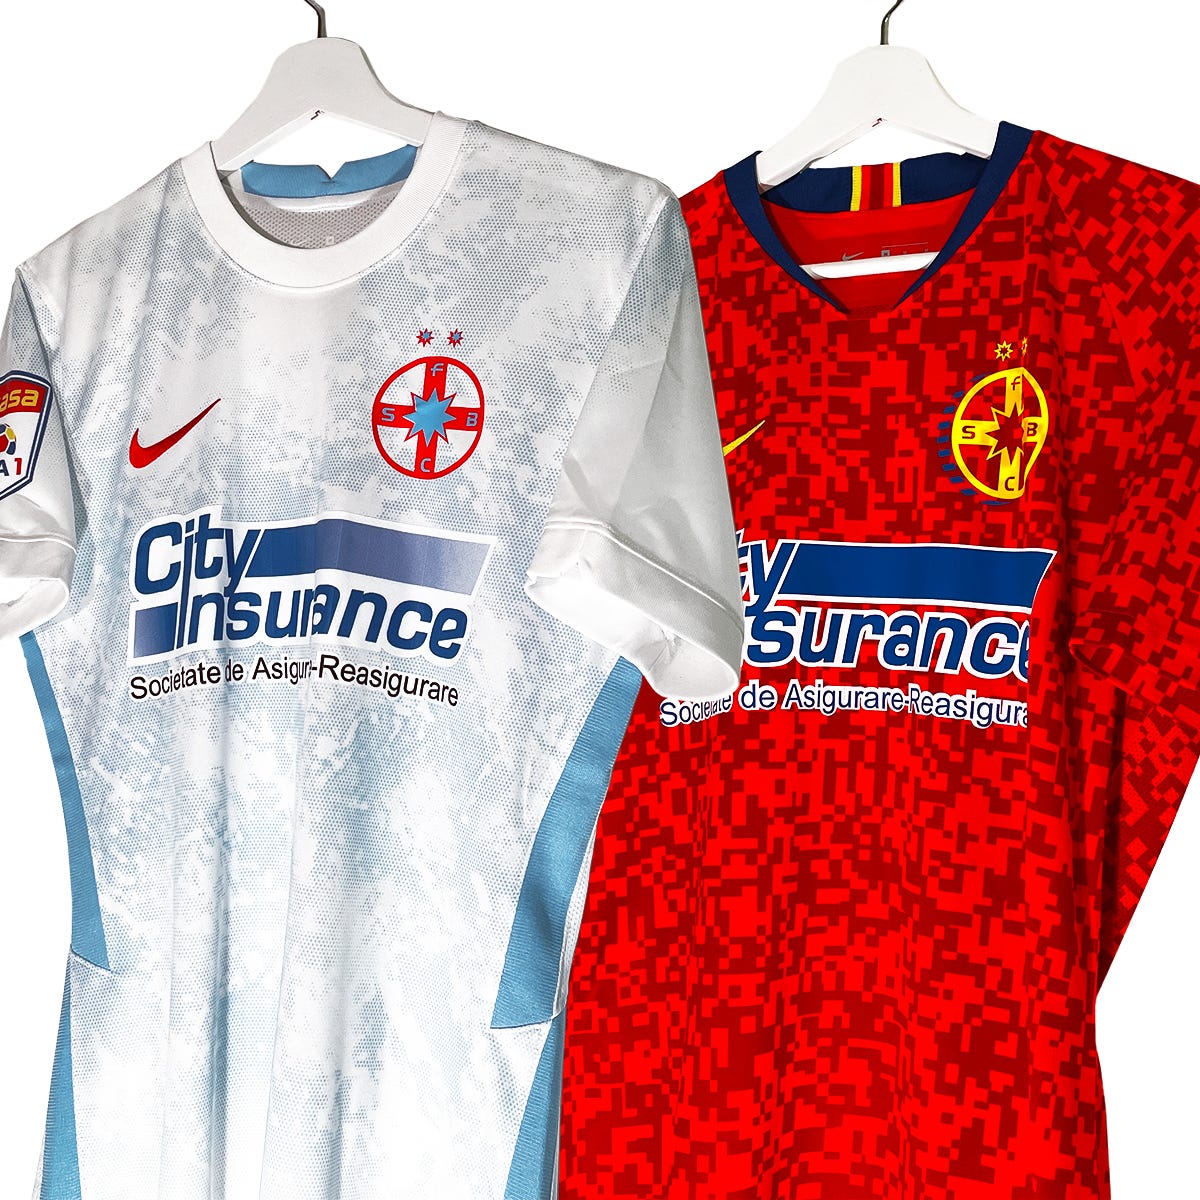 Soccer, football or whatever: Steaua București (Fotbal Club FCSB